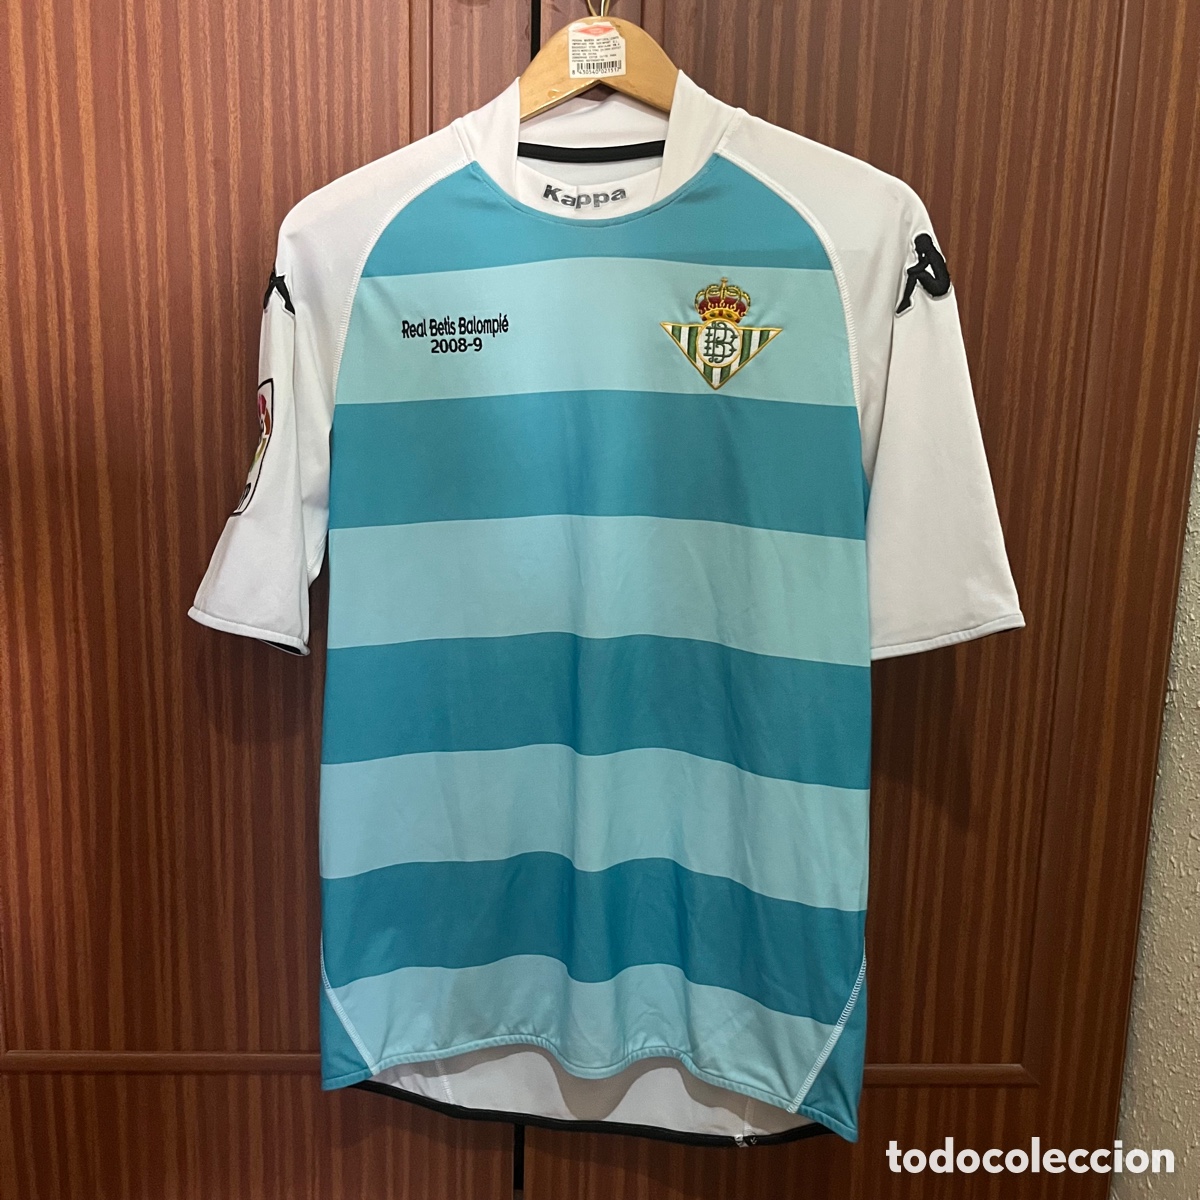 fútbol - camiseta real betis balompié / kappa - Buy Football T-Shirts on  todocoleccion